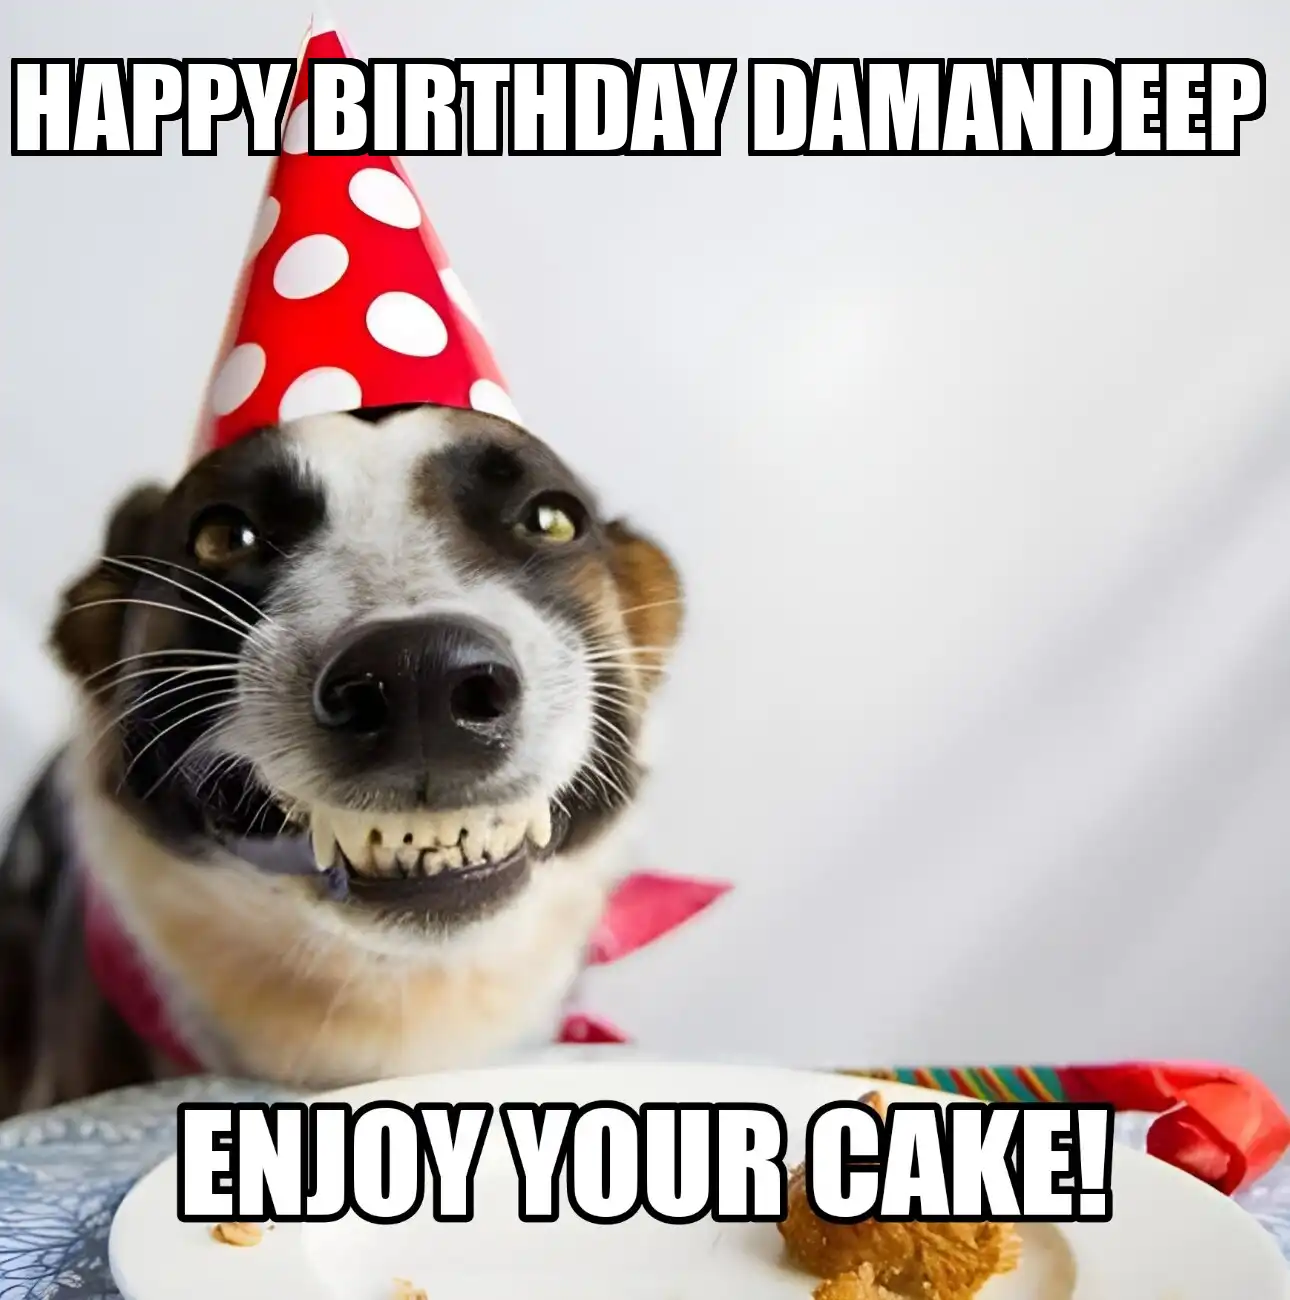 Happy Birthday Damandeep Enjoy Your Cake Dog Meme